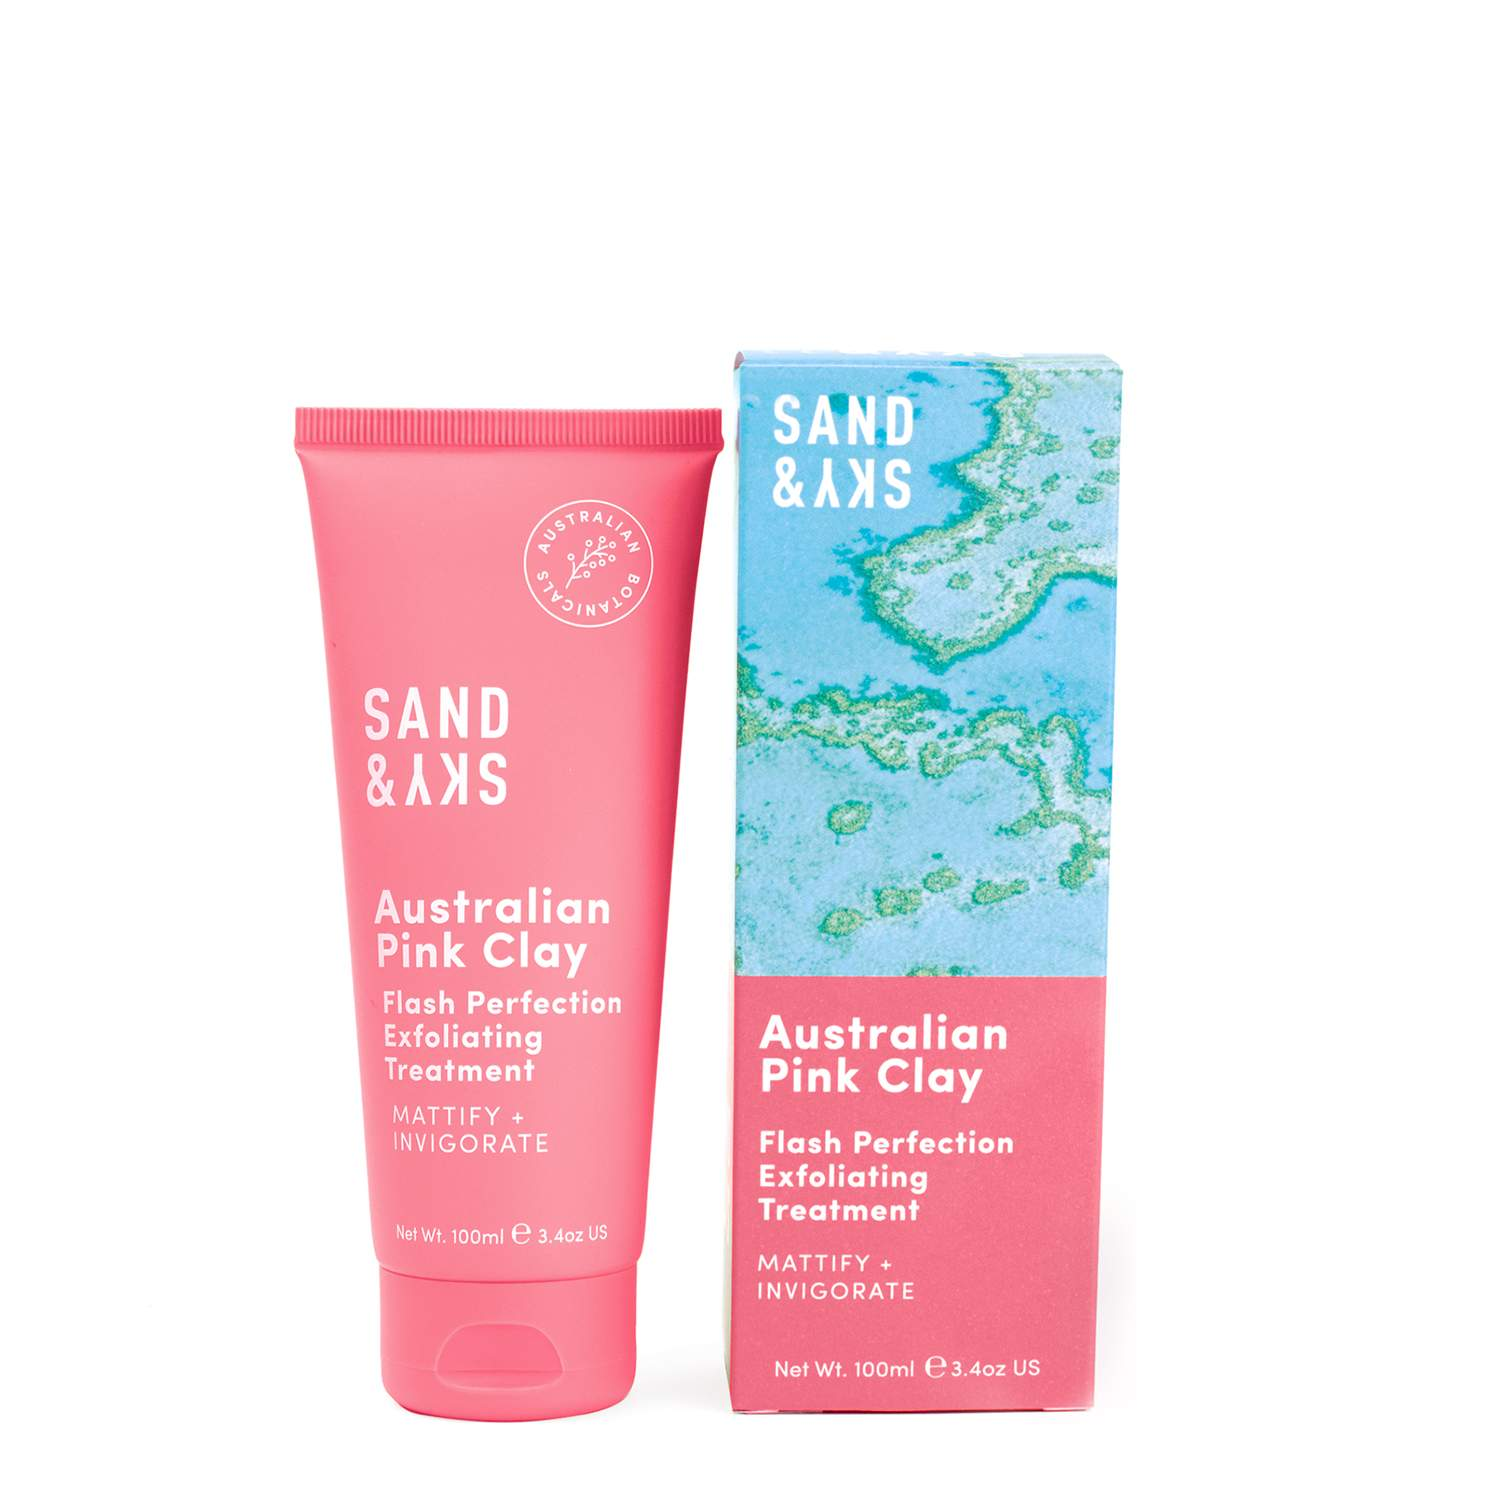 Sand & Sky Australian Pink Clay - Flash Perfection Exfoliating Treatment